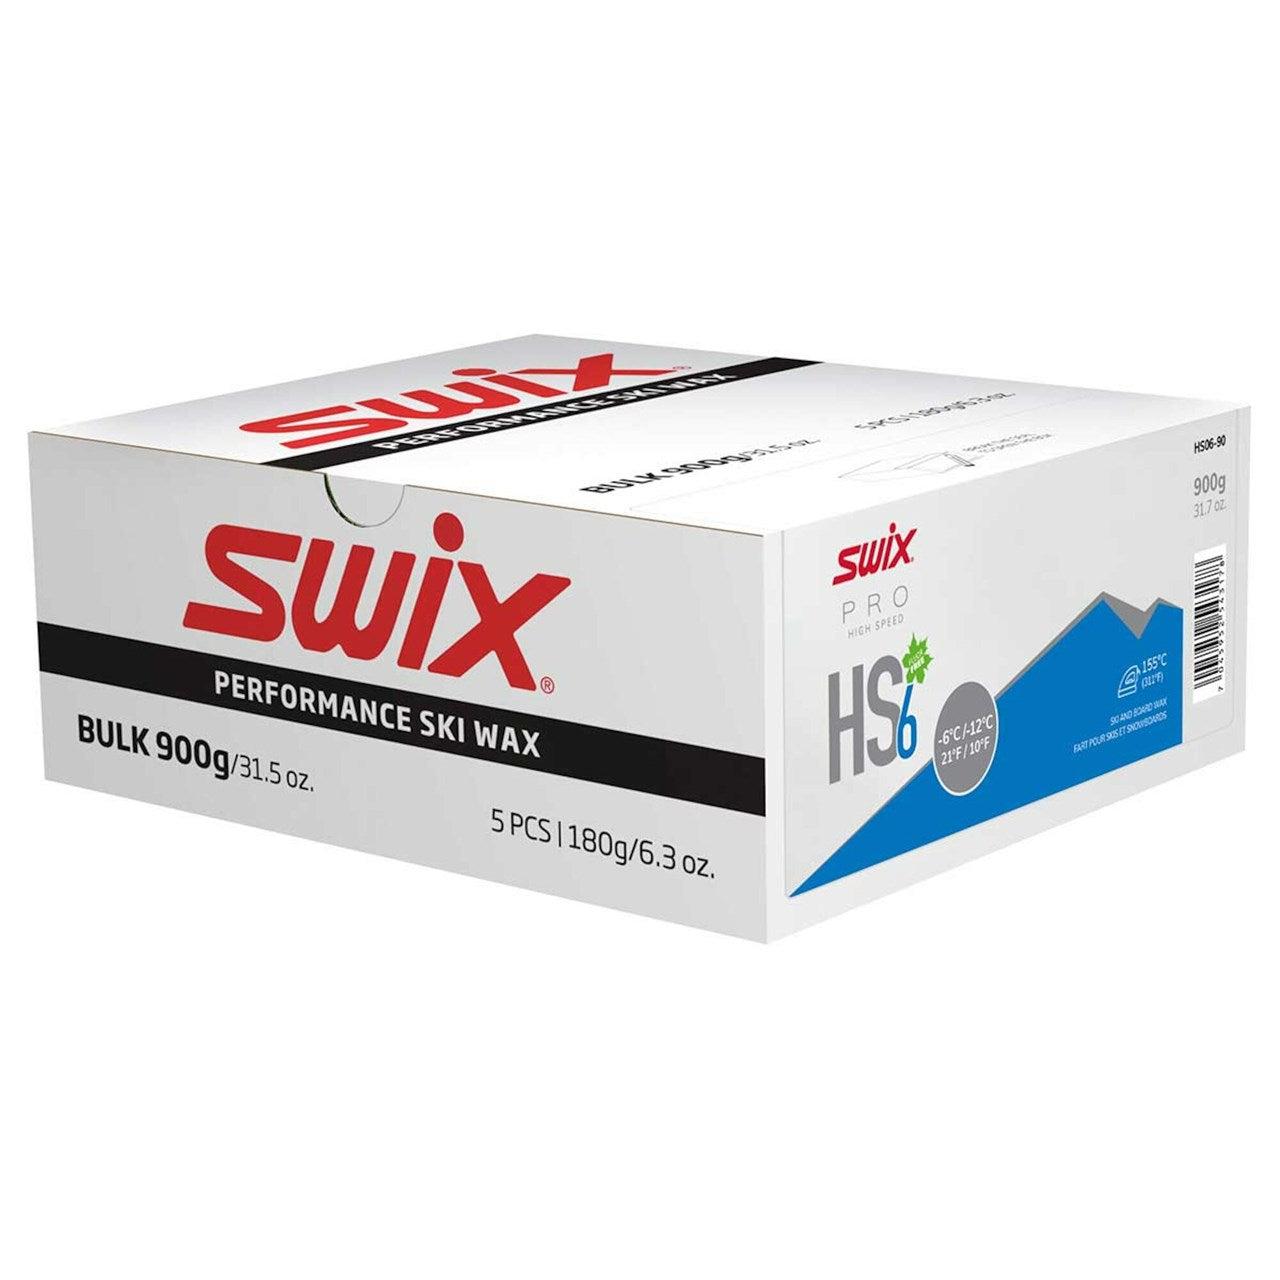 Swix HS6 Glide Wax 900g Bulk